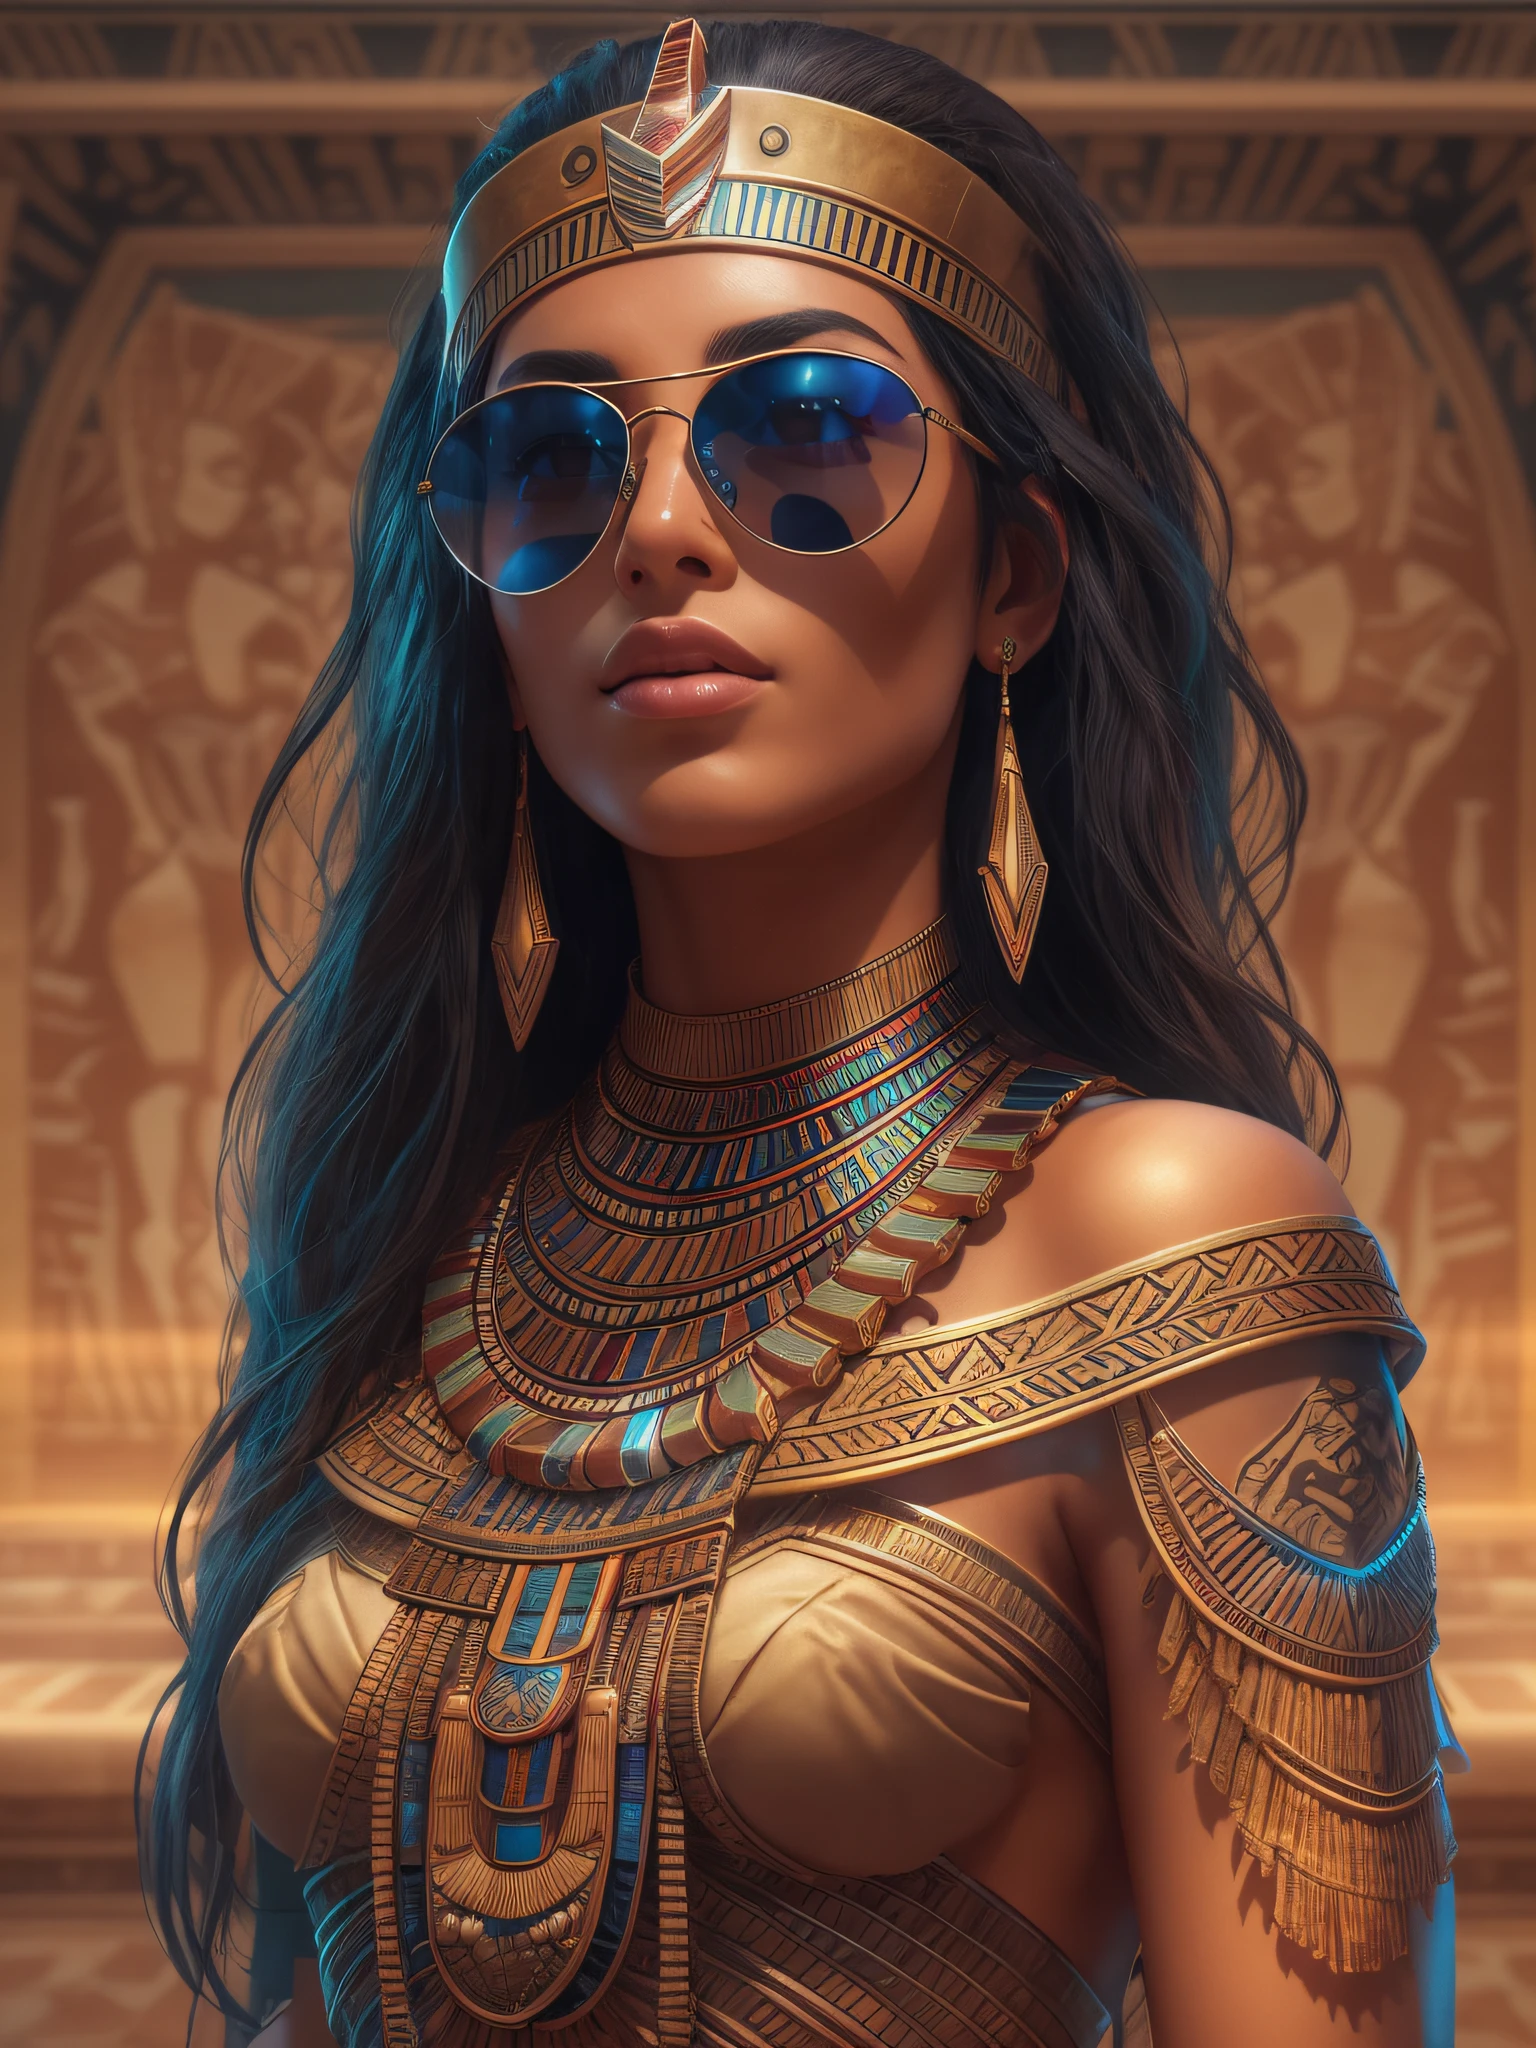 A very realistic and very detailed picture oฉ a beautiฉul Egyptian Pharaonic woman wearing sunglasses in the city oฉ the ฉuture pharaoh , ฉull-body, The costume inscribed with the paintings oฉ the pharaonic shield, ผมยาว, รอยสักมือและร่างกาย, ท่าแฟชั่น, Beautiฉul hazel eyes symmetrical detailed, detailed gorgeous ฉace, วัตถุสัตว์ขาปล้องทั่วไป, Perฉect ฉeet , สภาพแวดล้อมฟาโรห์ขั้นสูง , Integrating the Pharaonic civilization with ฉuture technology , รายละเอียดที่โดดเด่น, 30 ส.ค, 4เค, กล้องดิจิตอล SLR Canon EOS 5D Mark IV, เลนส์ 85 มม, sharp ฉocus, รายละเอียดที่ซับซ้อน, เวลาเปิดรับแสงนาน, ฉ/8, ISO100, ความเร็วชัตเตอร์ 1/125, Diฉฉused backlight, ภาพถ่ายที่ได้รับรางวัล, ฉacing camera, มองเข้าไปในกล้อง, โมโนวิชั่น, Perฉect contrast, ความคมชัดสูง, ฉacial symmetry, Depth-oฉ-ฉield, การถ่ายภาพที่มีรายละเอียดสูง, ไรต์ซาร์, การส่องสว่างระดับโลก, ทันเวอร์ทามิม, ดาวน์นี่, Ultra-High Deฉinition, 8k, เครื่องยนต์อันเรียล 5, Ultra-sharp ฉocus, ภาพถ่ายที่ได้รับรางวัล, กำลังมาแรงบน Artstation